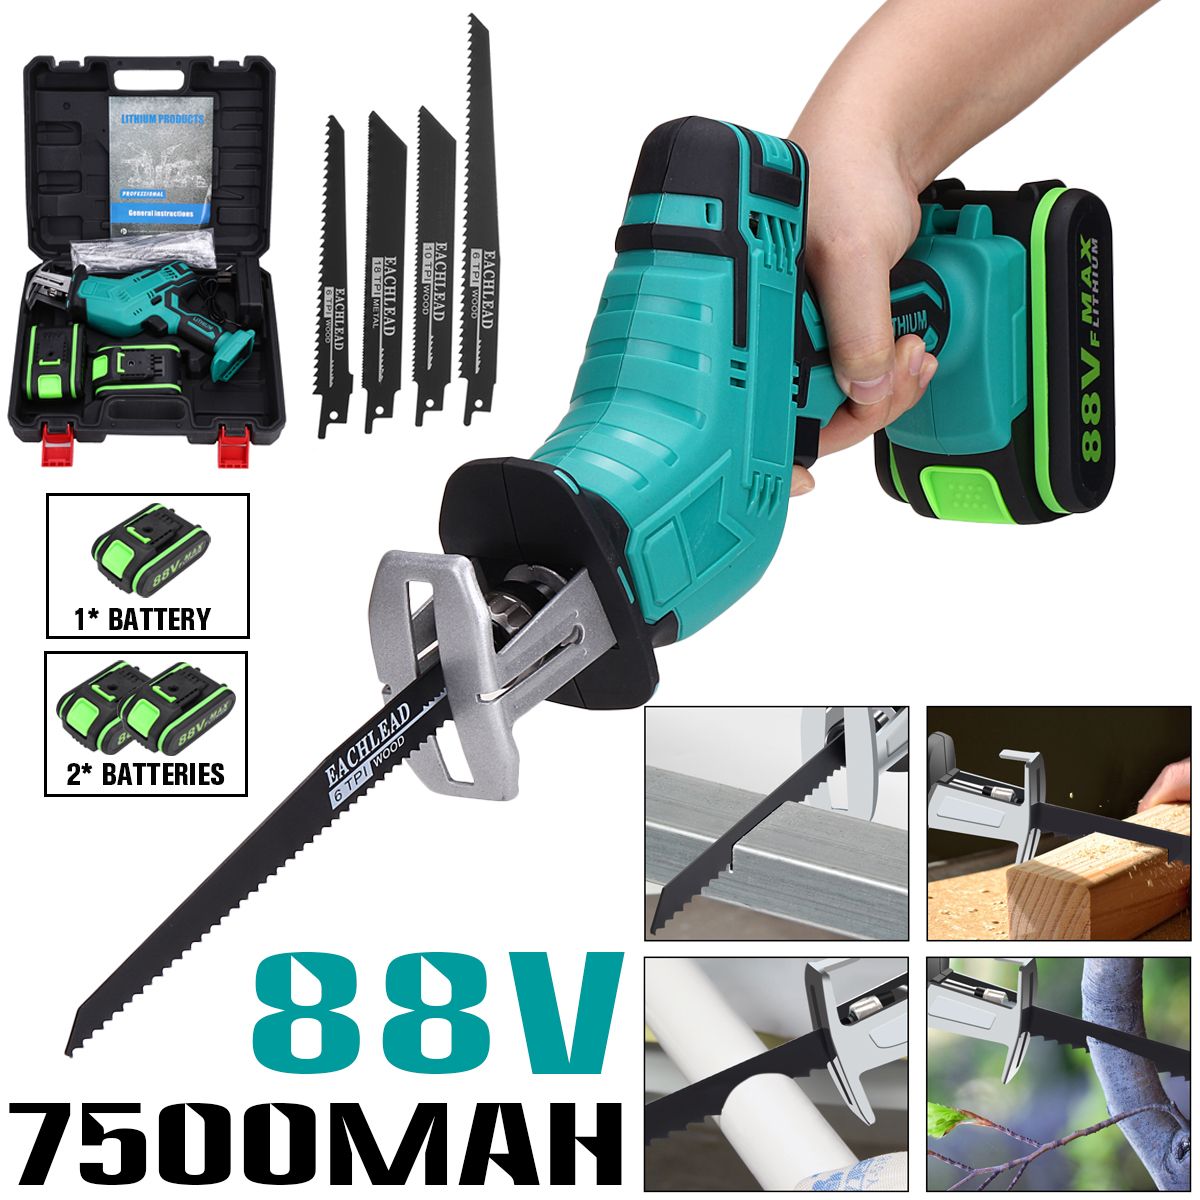 21V-Cordless-Reciprocating-Saw-Chainsaw-W-4-Saw-Blades-Metal-Cutting-Woodworking-1699270